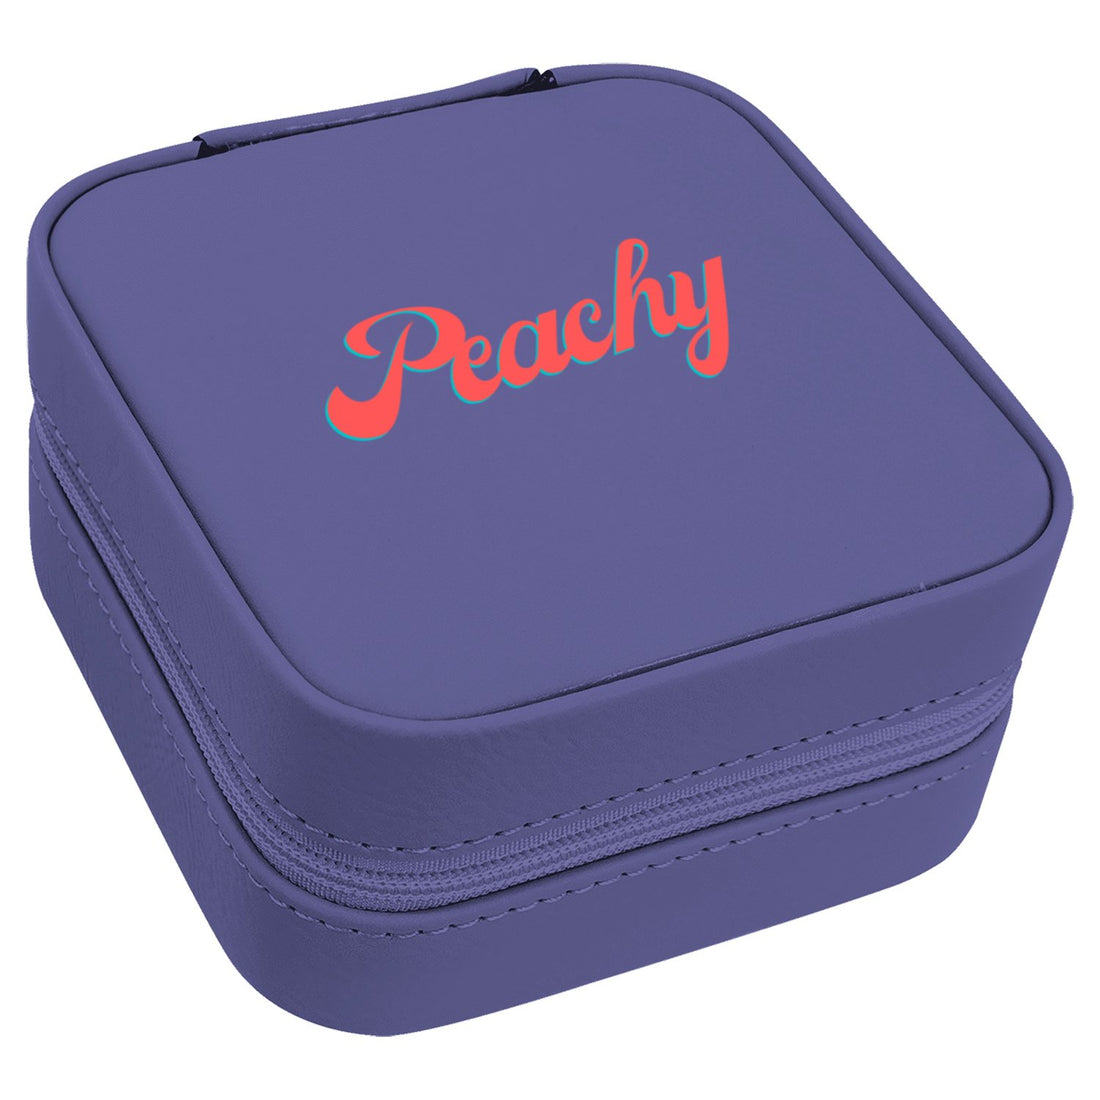 Peachy Jewelry Organizer - Positively Sassy - Peachy Jewelry Organizer